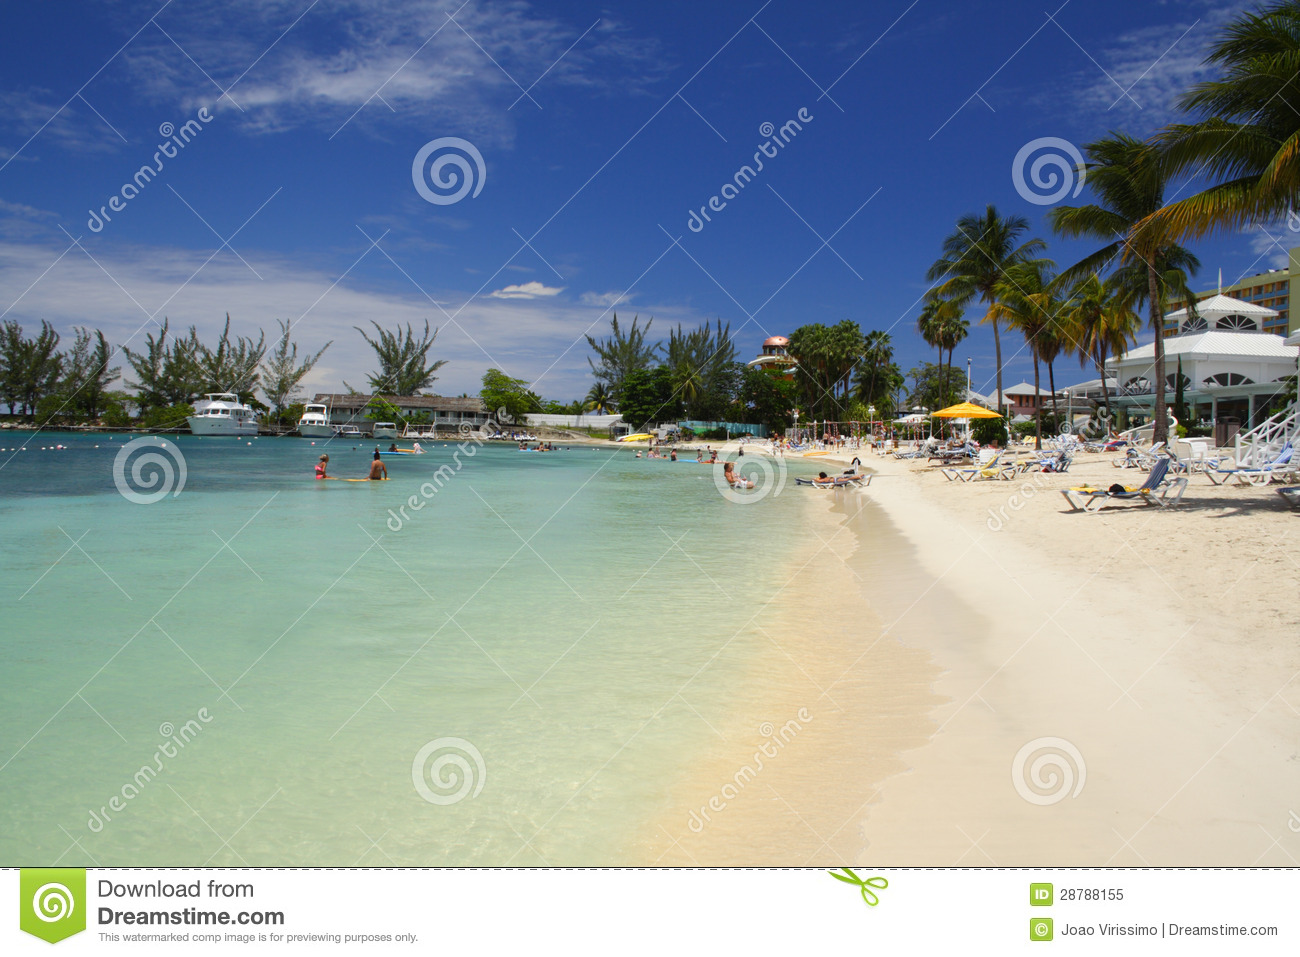 Turtle Beach Jamaica Royalty Free Stock Photo   Image  28788155